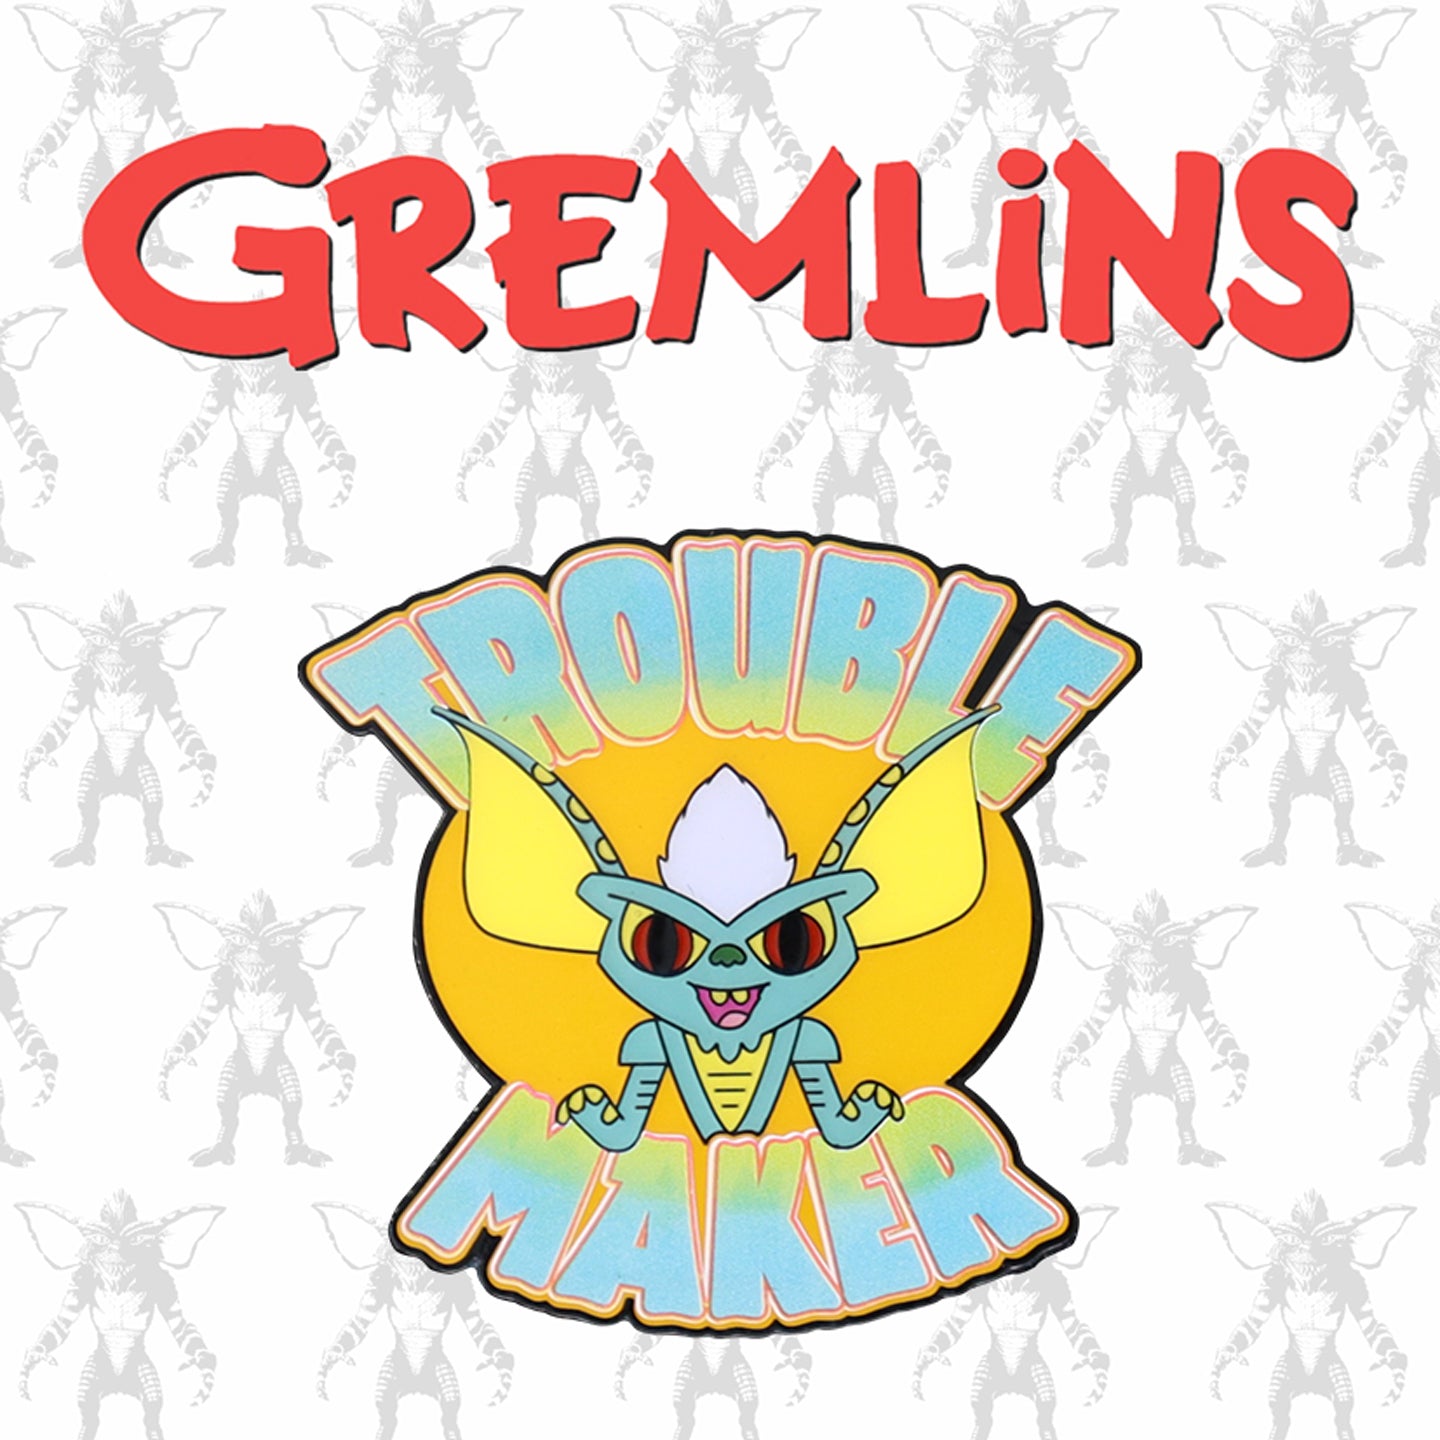 Gremlins Limited Edition Stripe Pin Badge